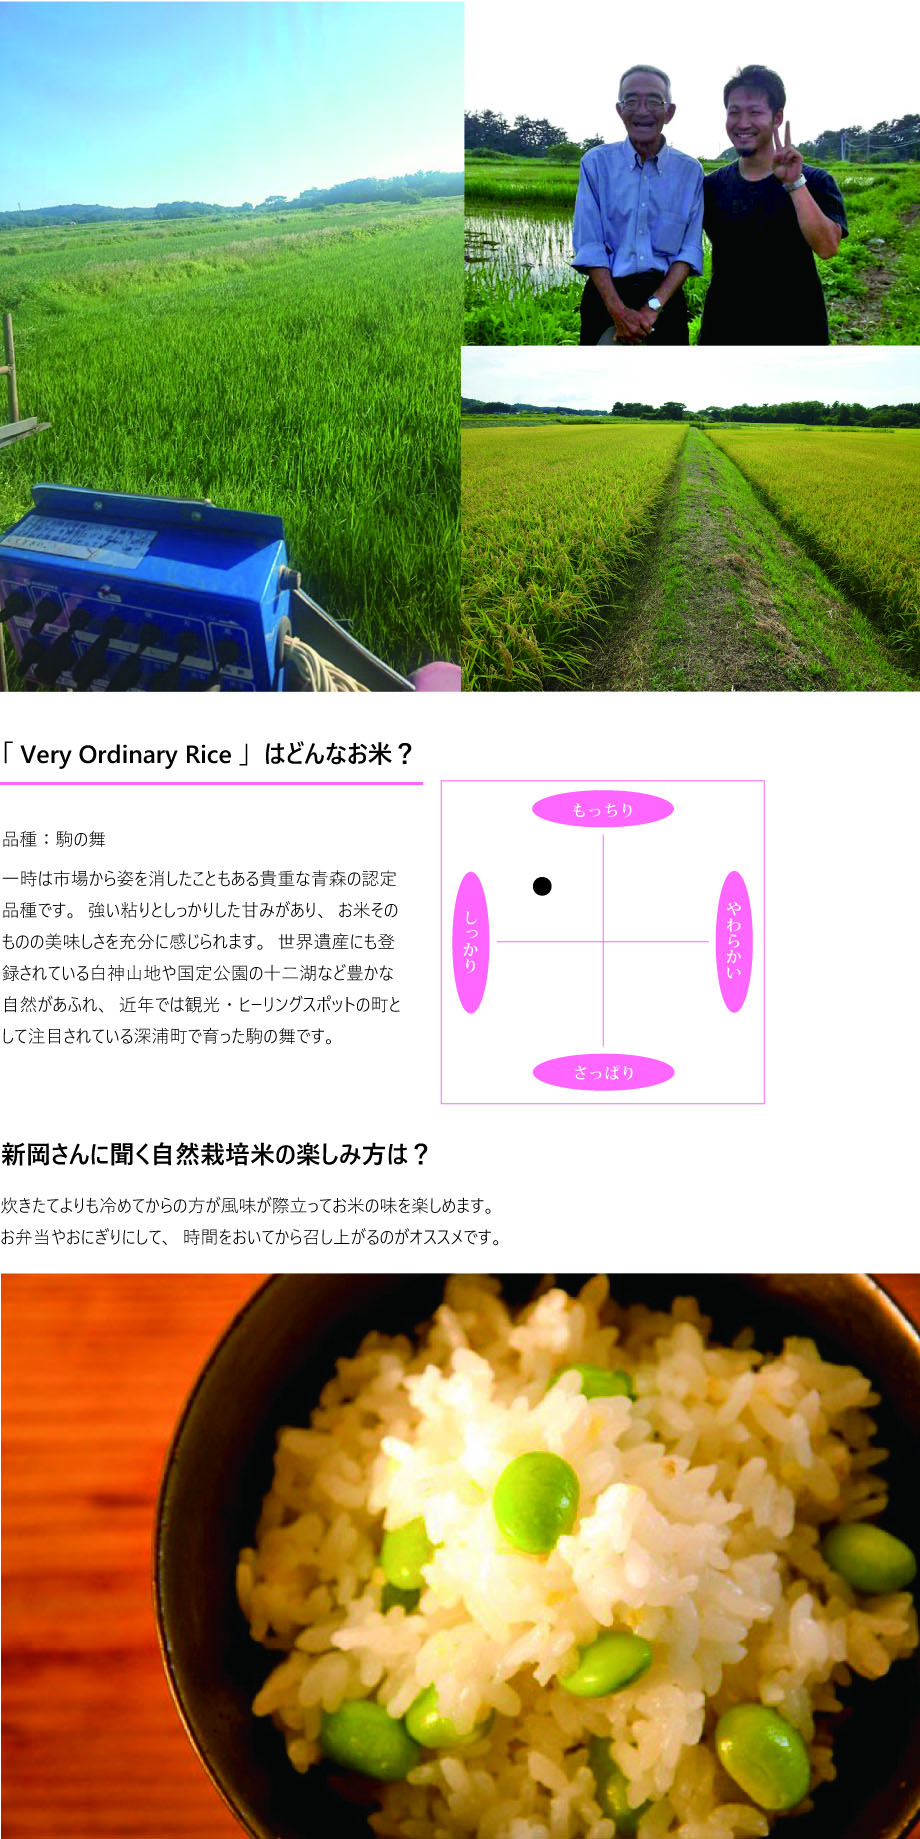 (R04産)Very Ordinary Rice白米1kg